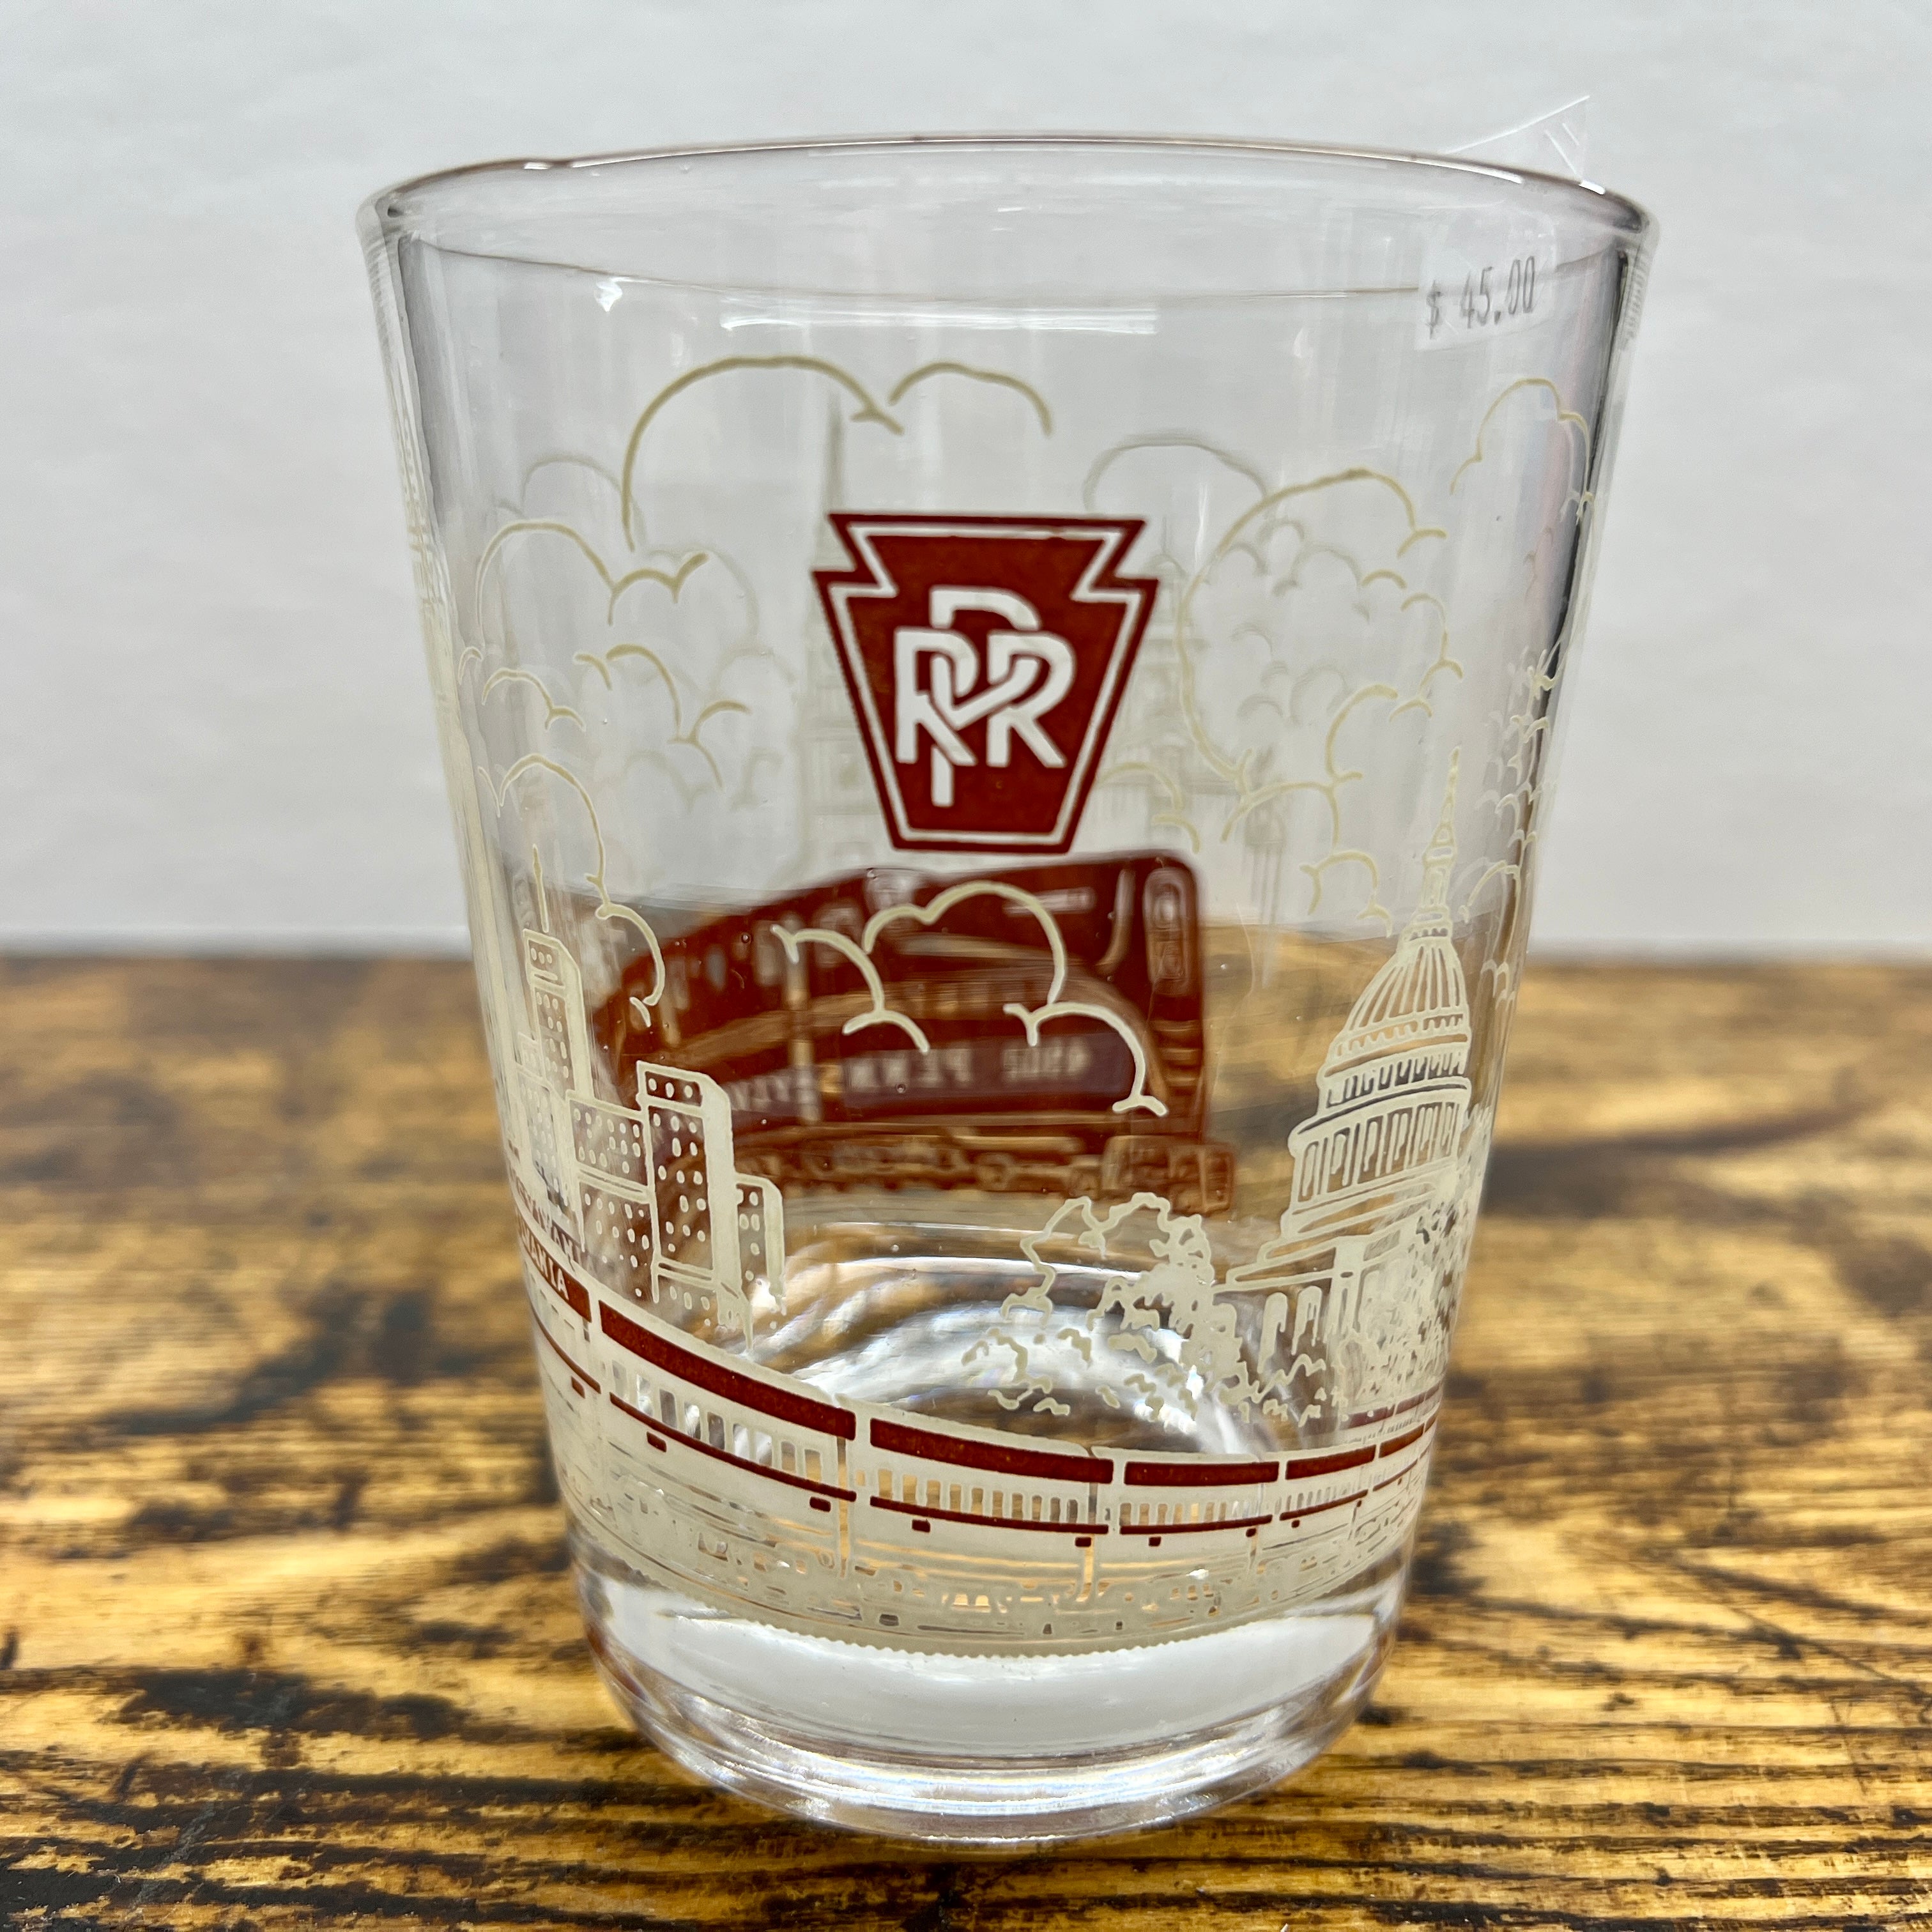 Pennsylvania Railroad Souvenir Tumbler Glass